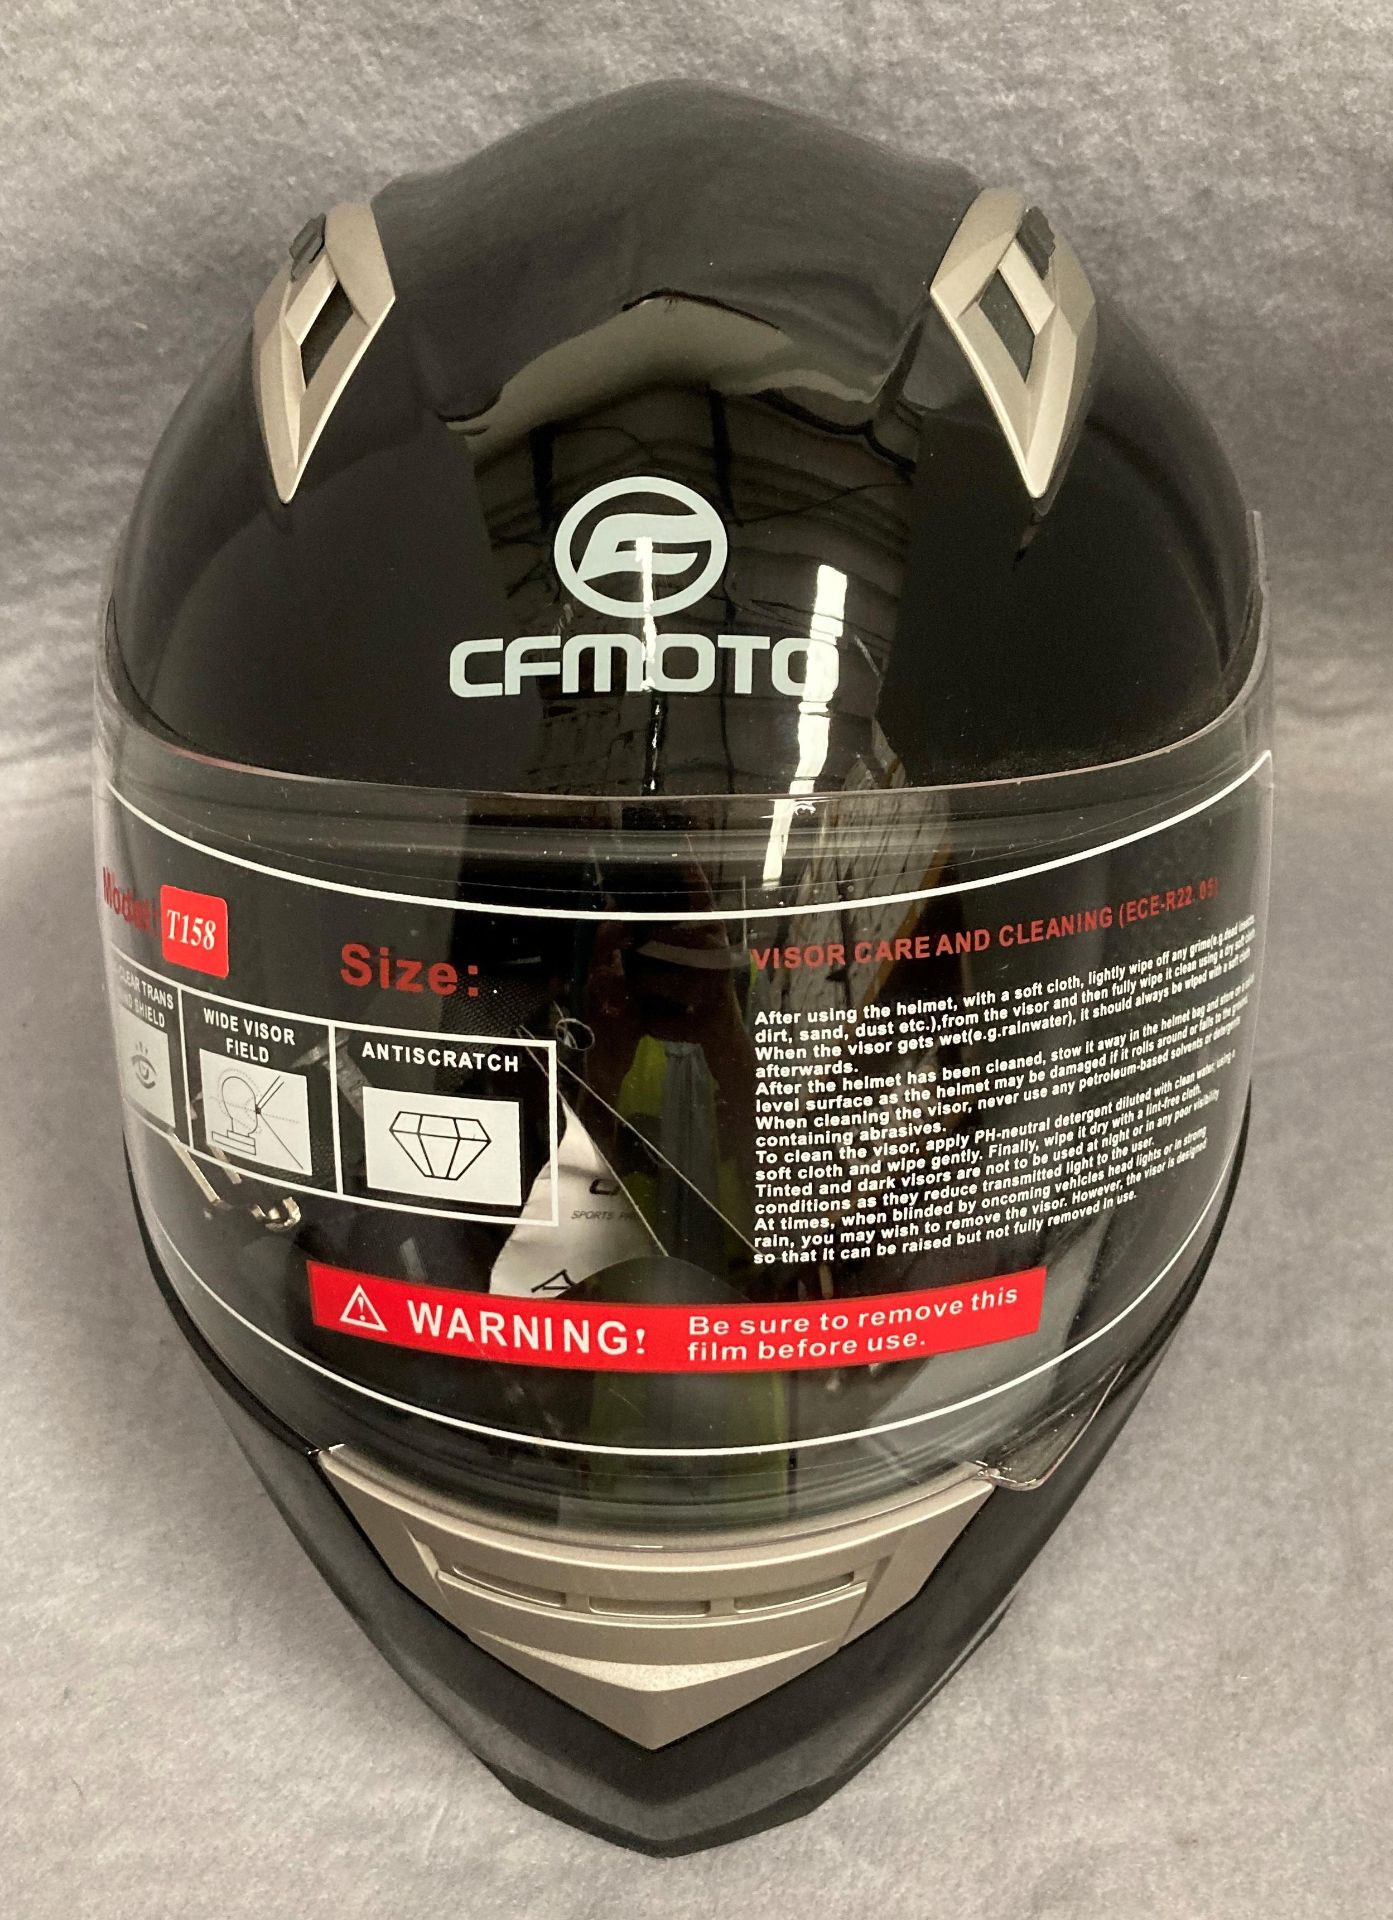 CF Moto T158 motorbike helmet in black - size L - in a dust bag, - Image 2 of 2